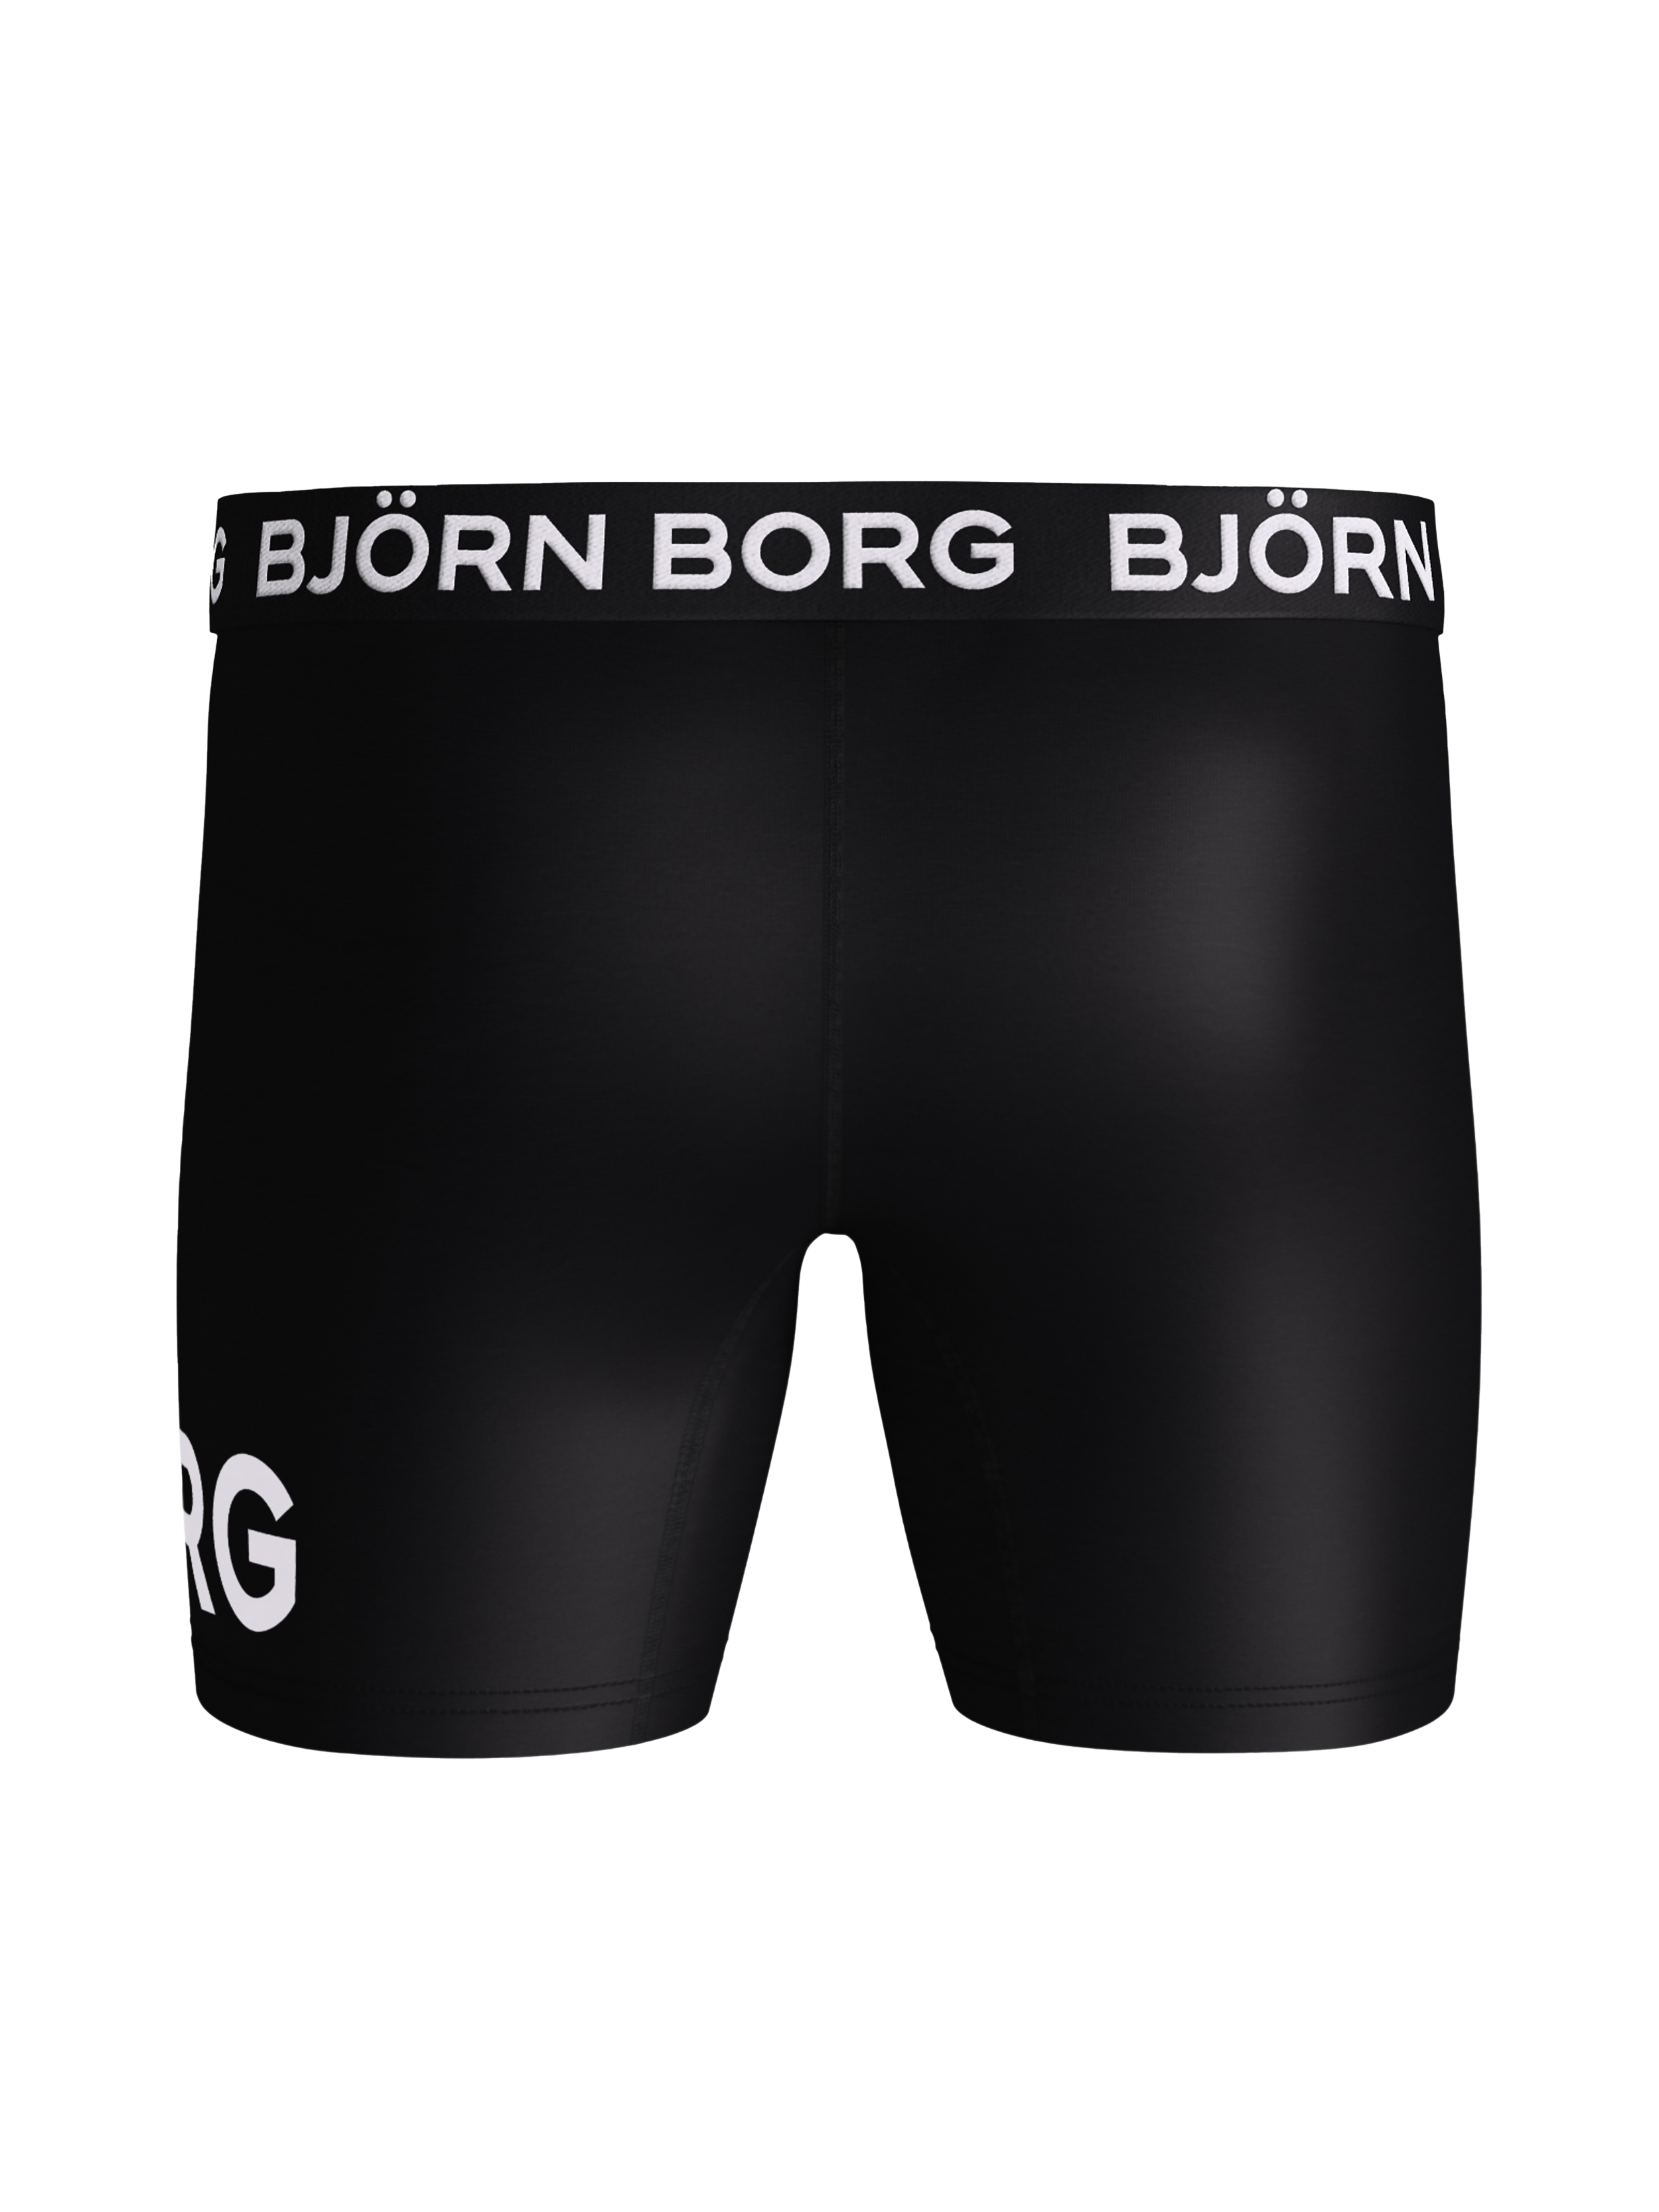 alias Eigendom Broer Placed Borg Performance Shorts - Black Beauty | Men | Björn Borg